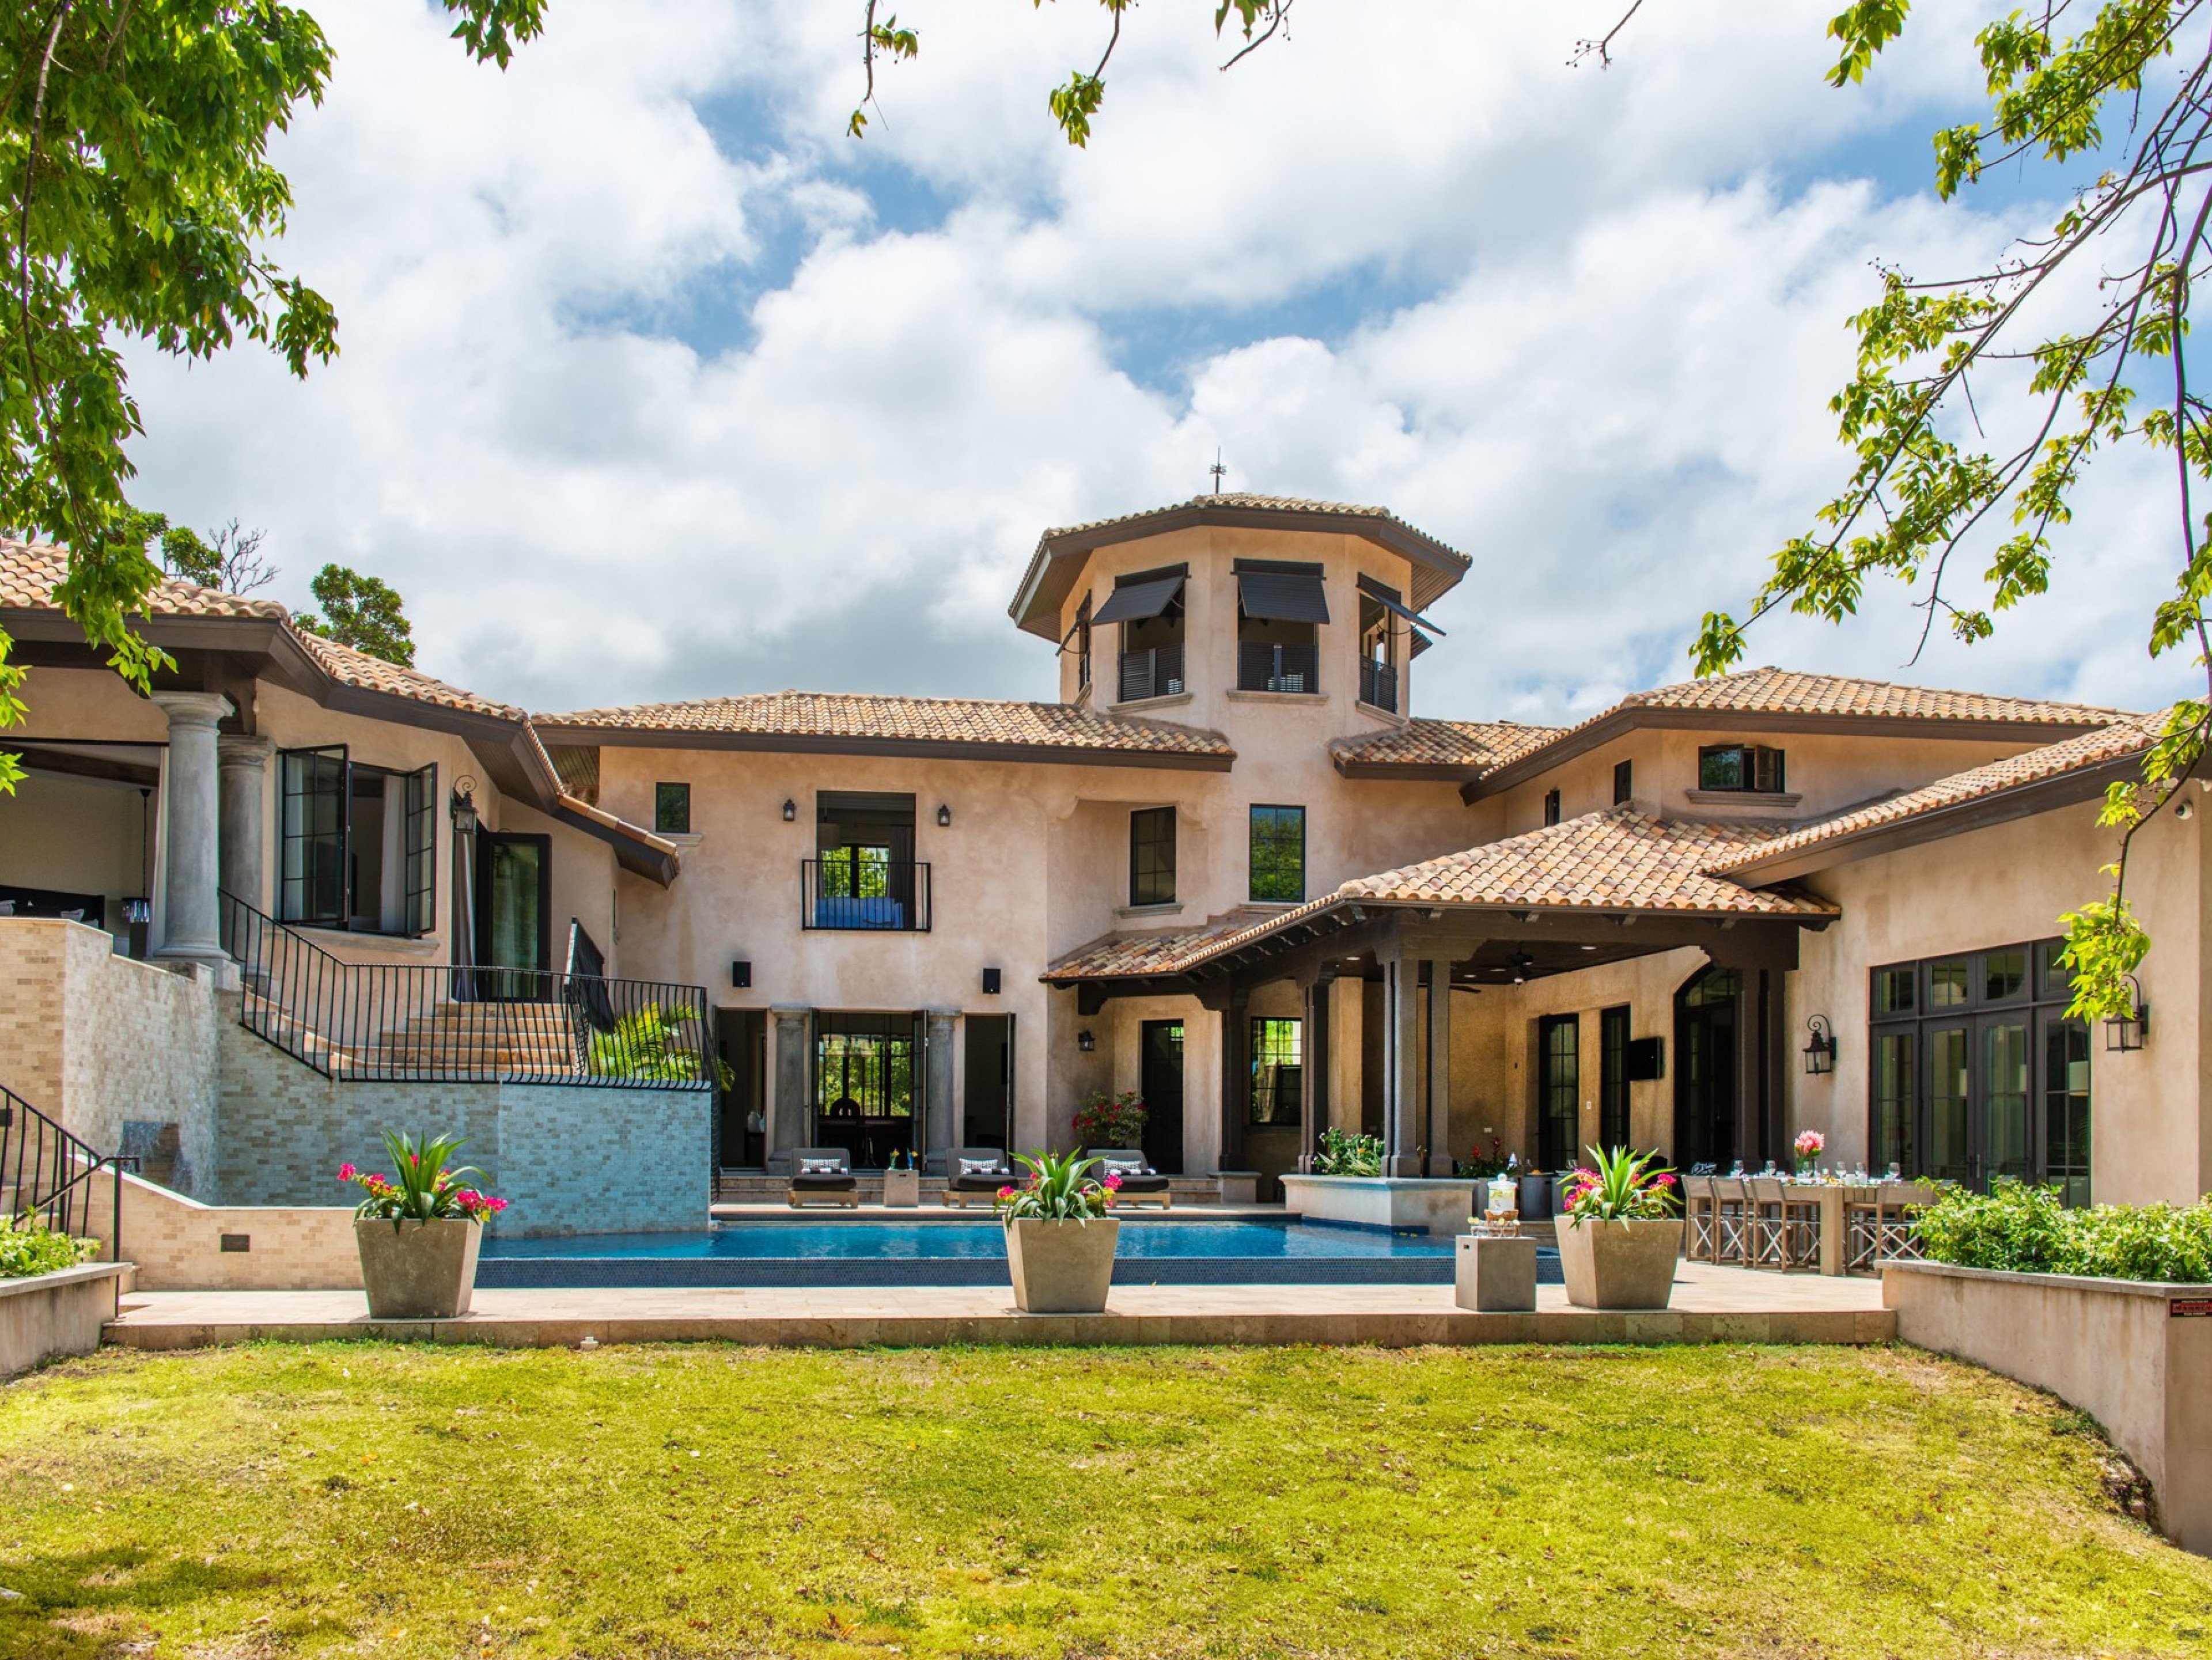 Villa Christina villas in Jamaica